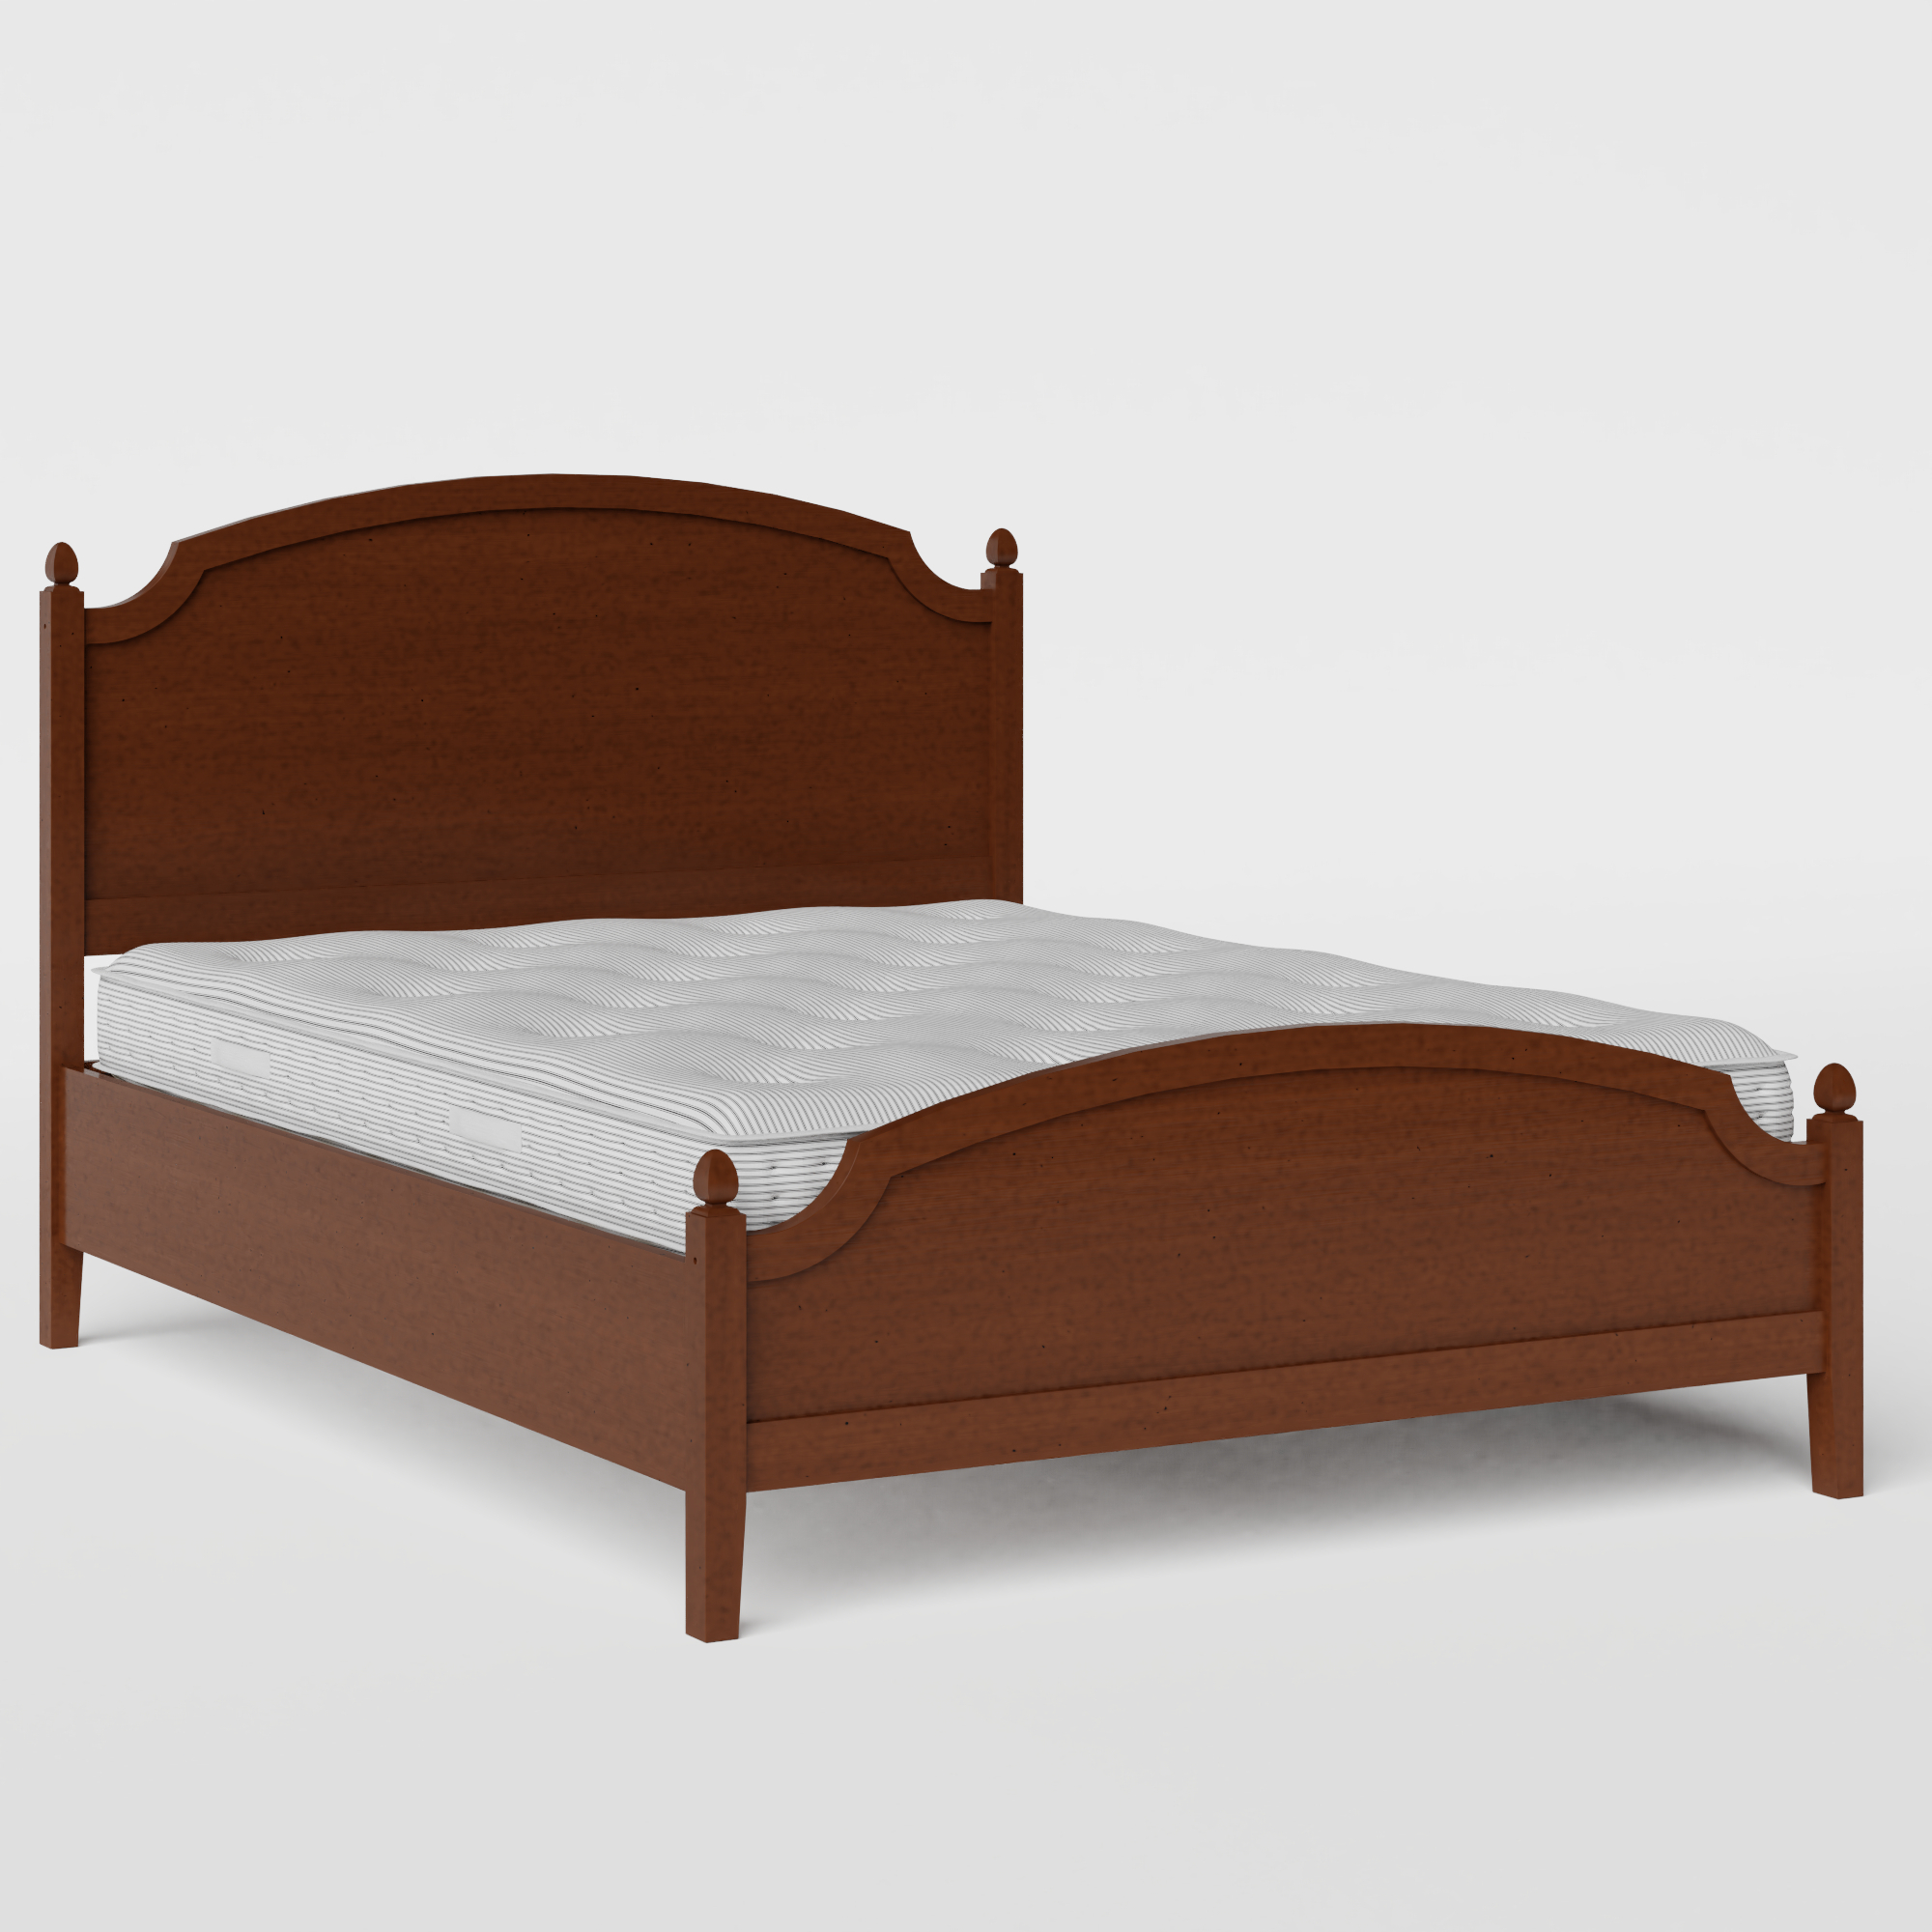 Kipling Low Footend wood bed in dark cherry with Juno mattress